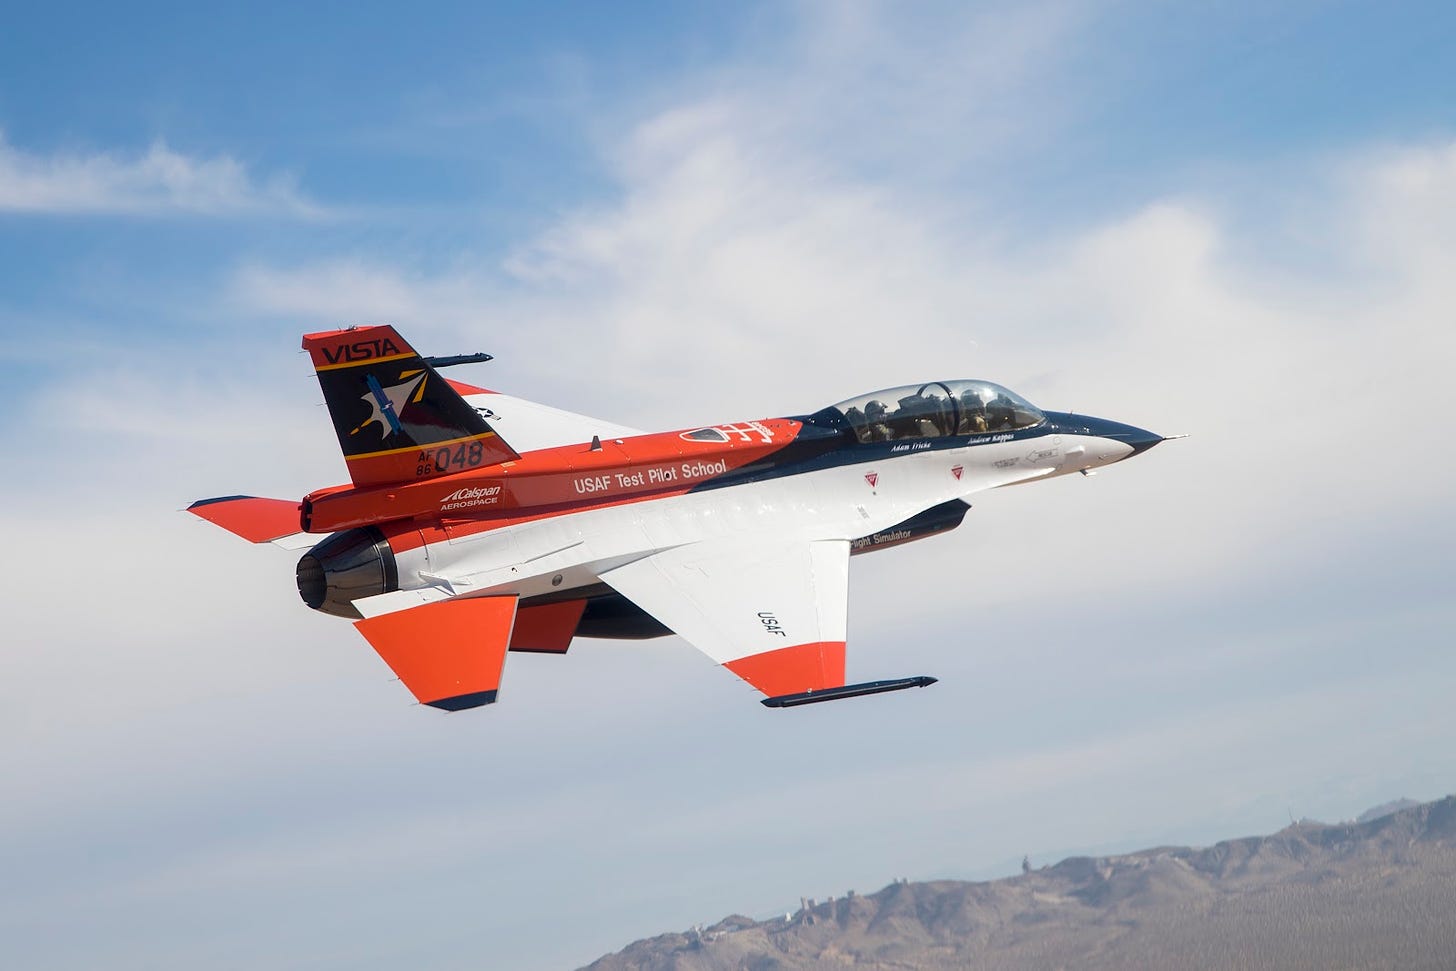 NF-16D VISTA becomes X-62A > Edwards Air Force Base > News